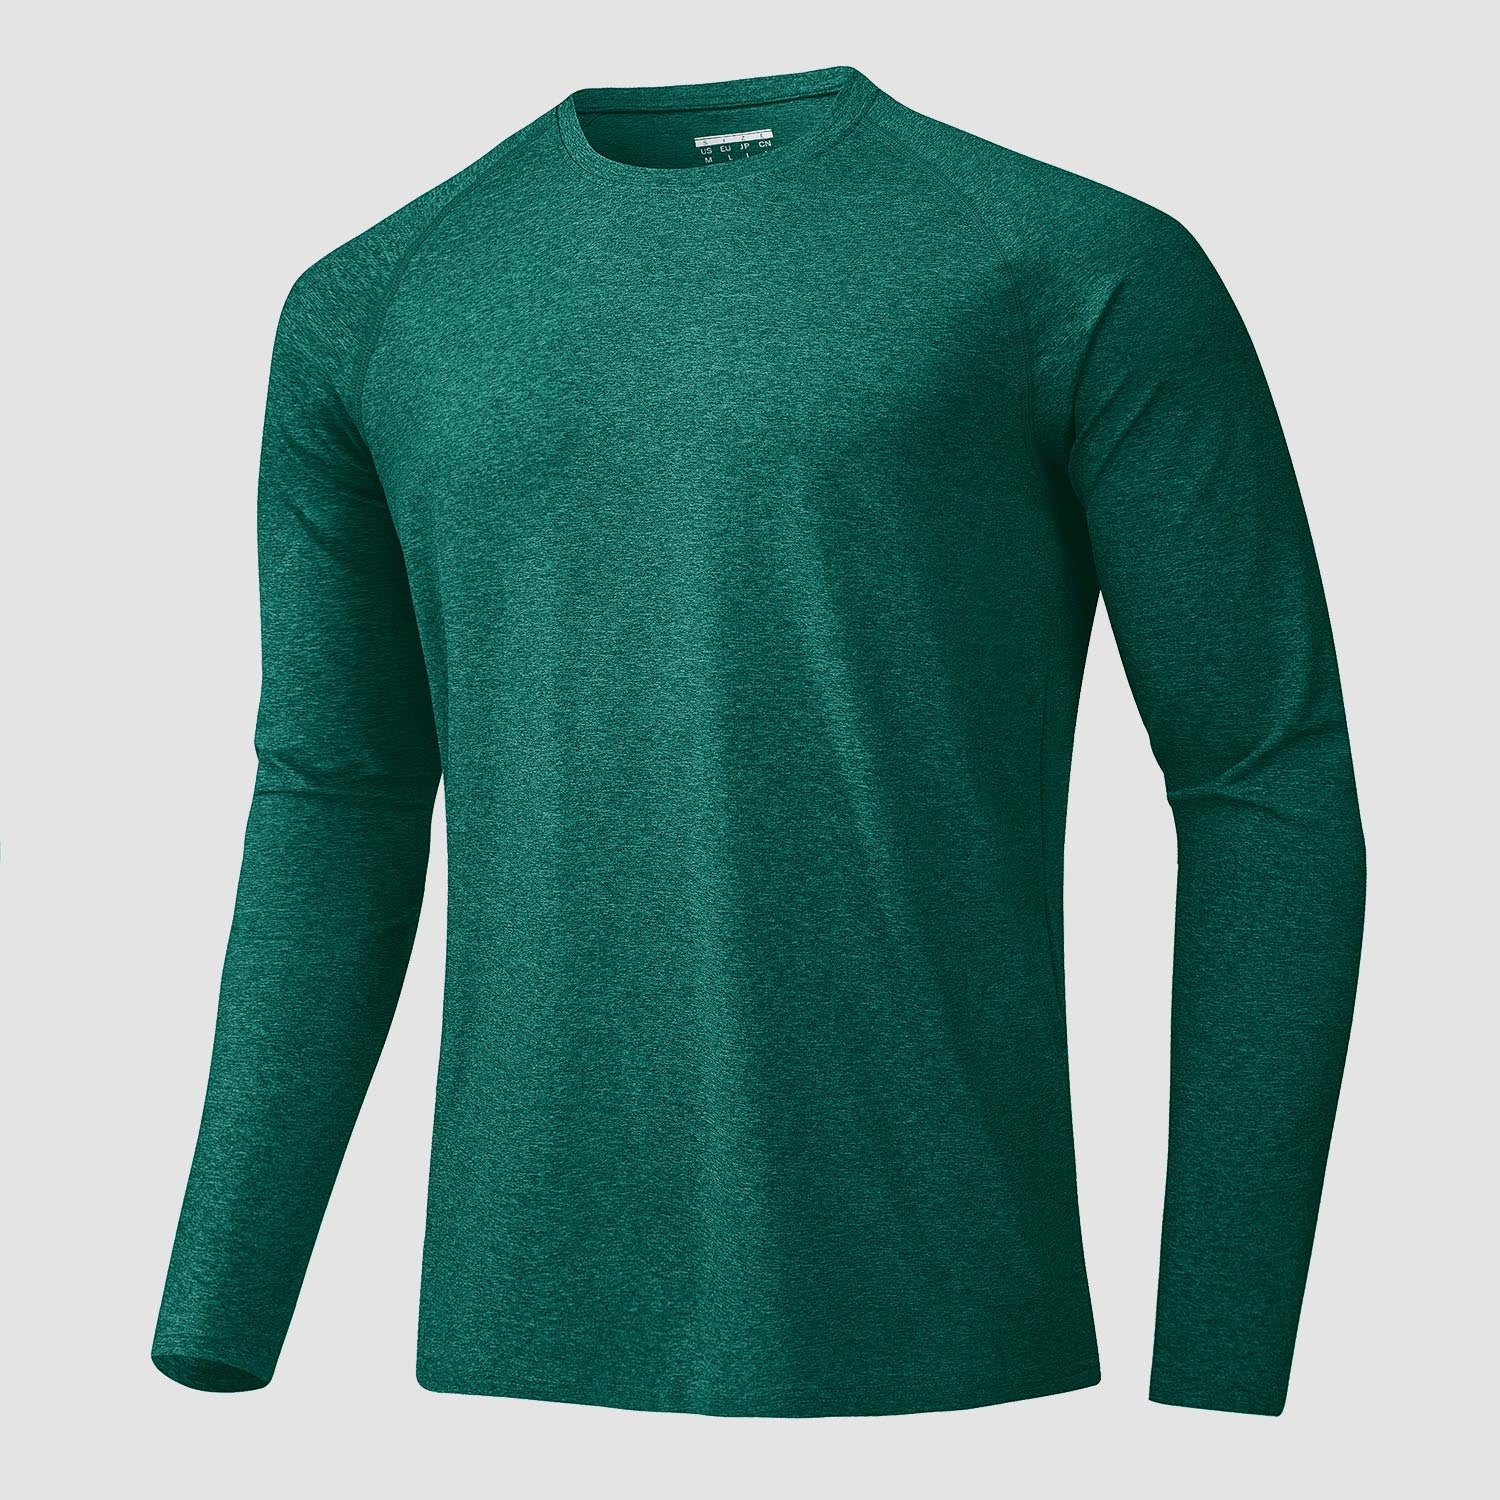 Mens UV Shirts Sun Protection Fishing Tops Outdoor Rash Guard Performance  Workout Shirts SPF Shirts For Men Running Shirts Long Sleeve Light Green